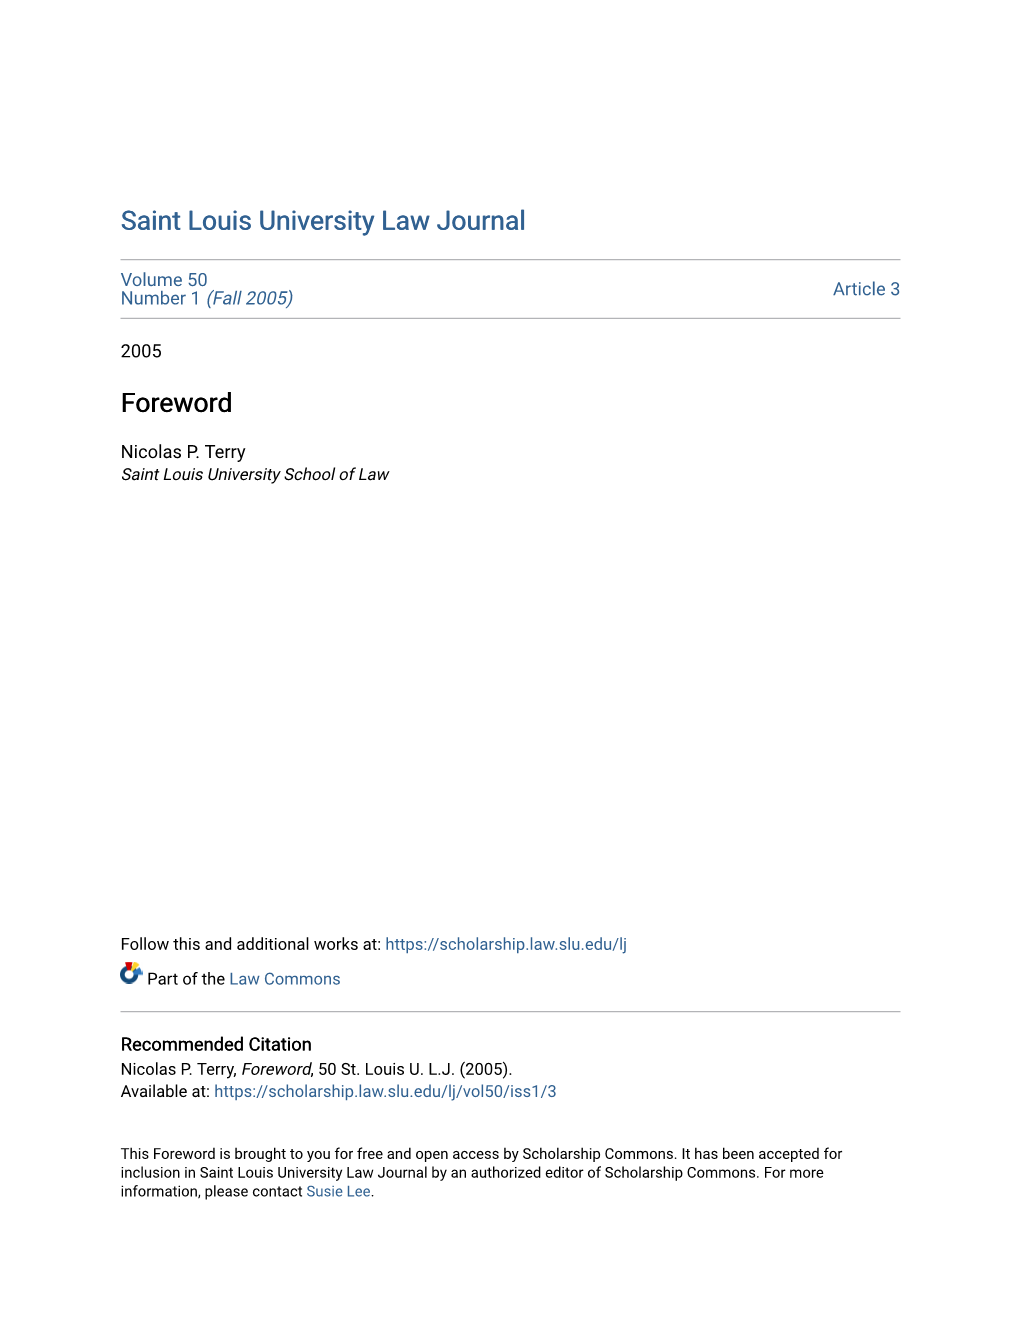 Saint Louis University Law Journal Foreword